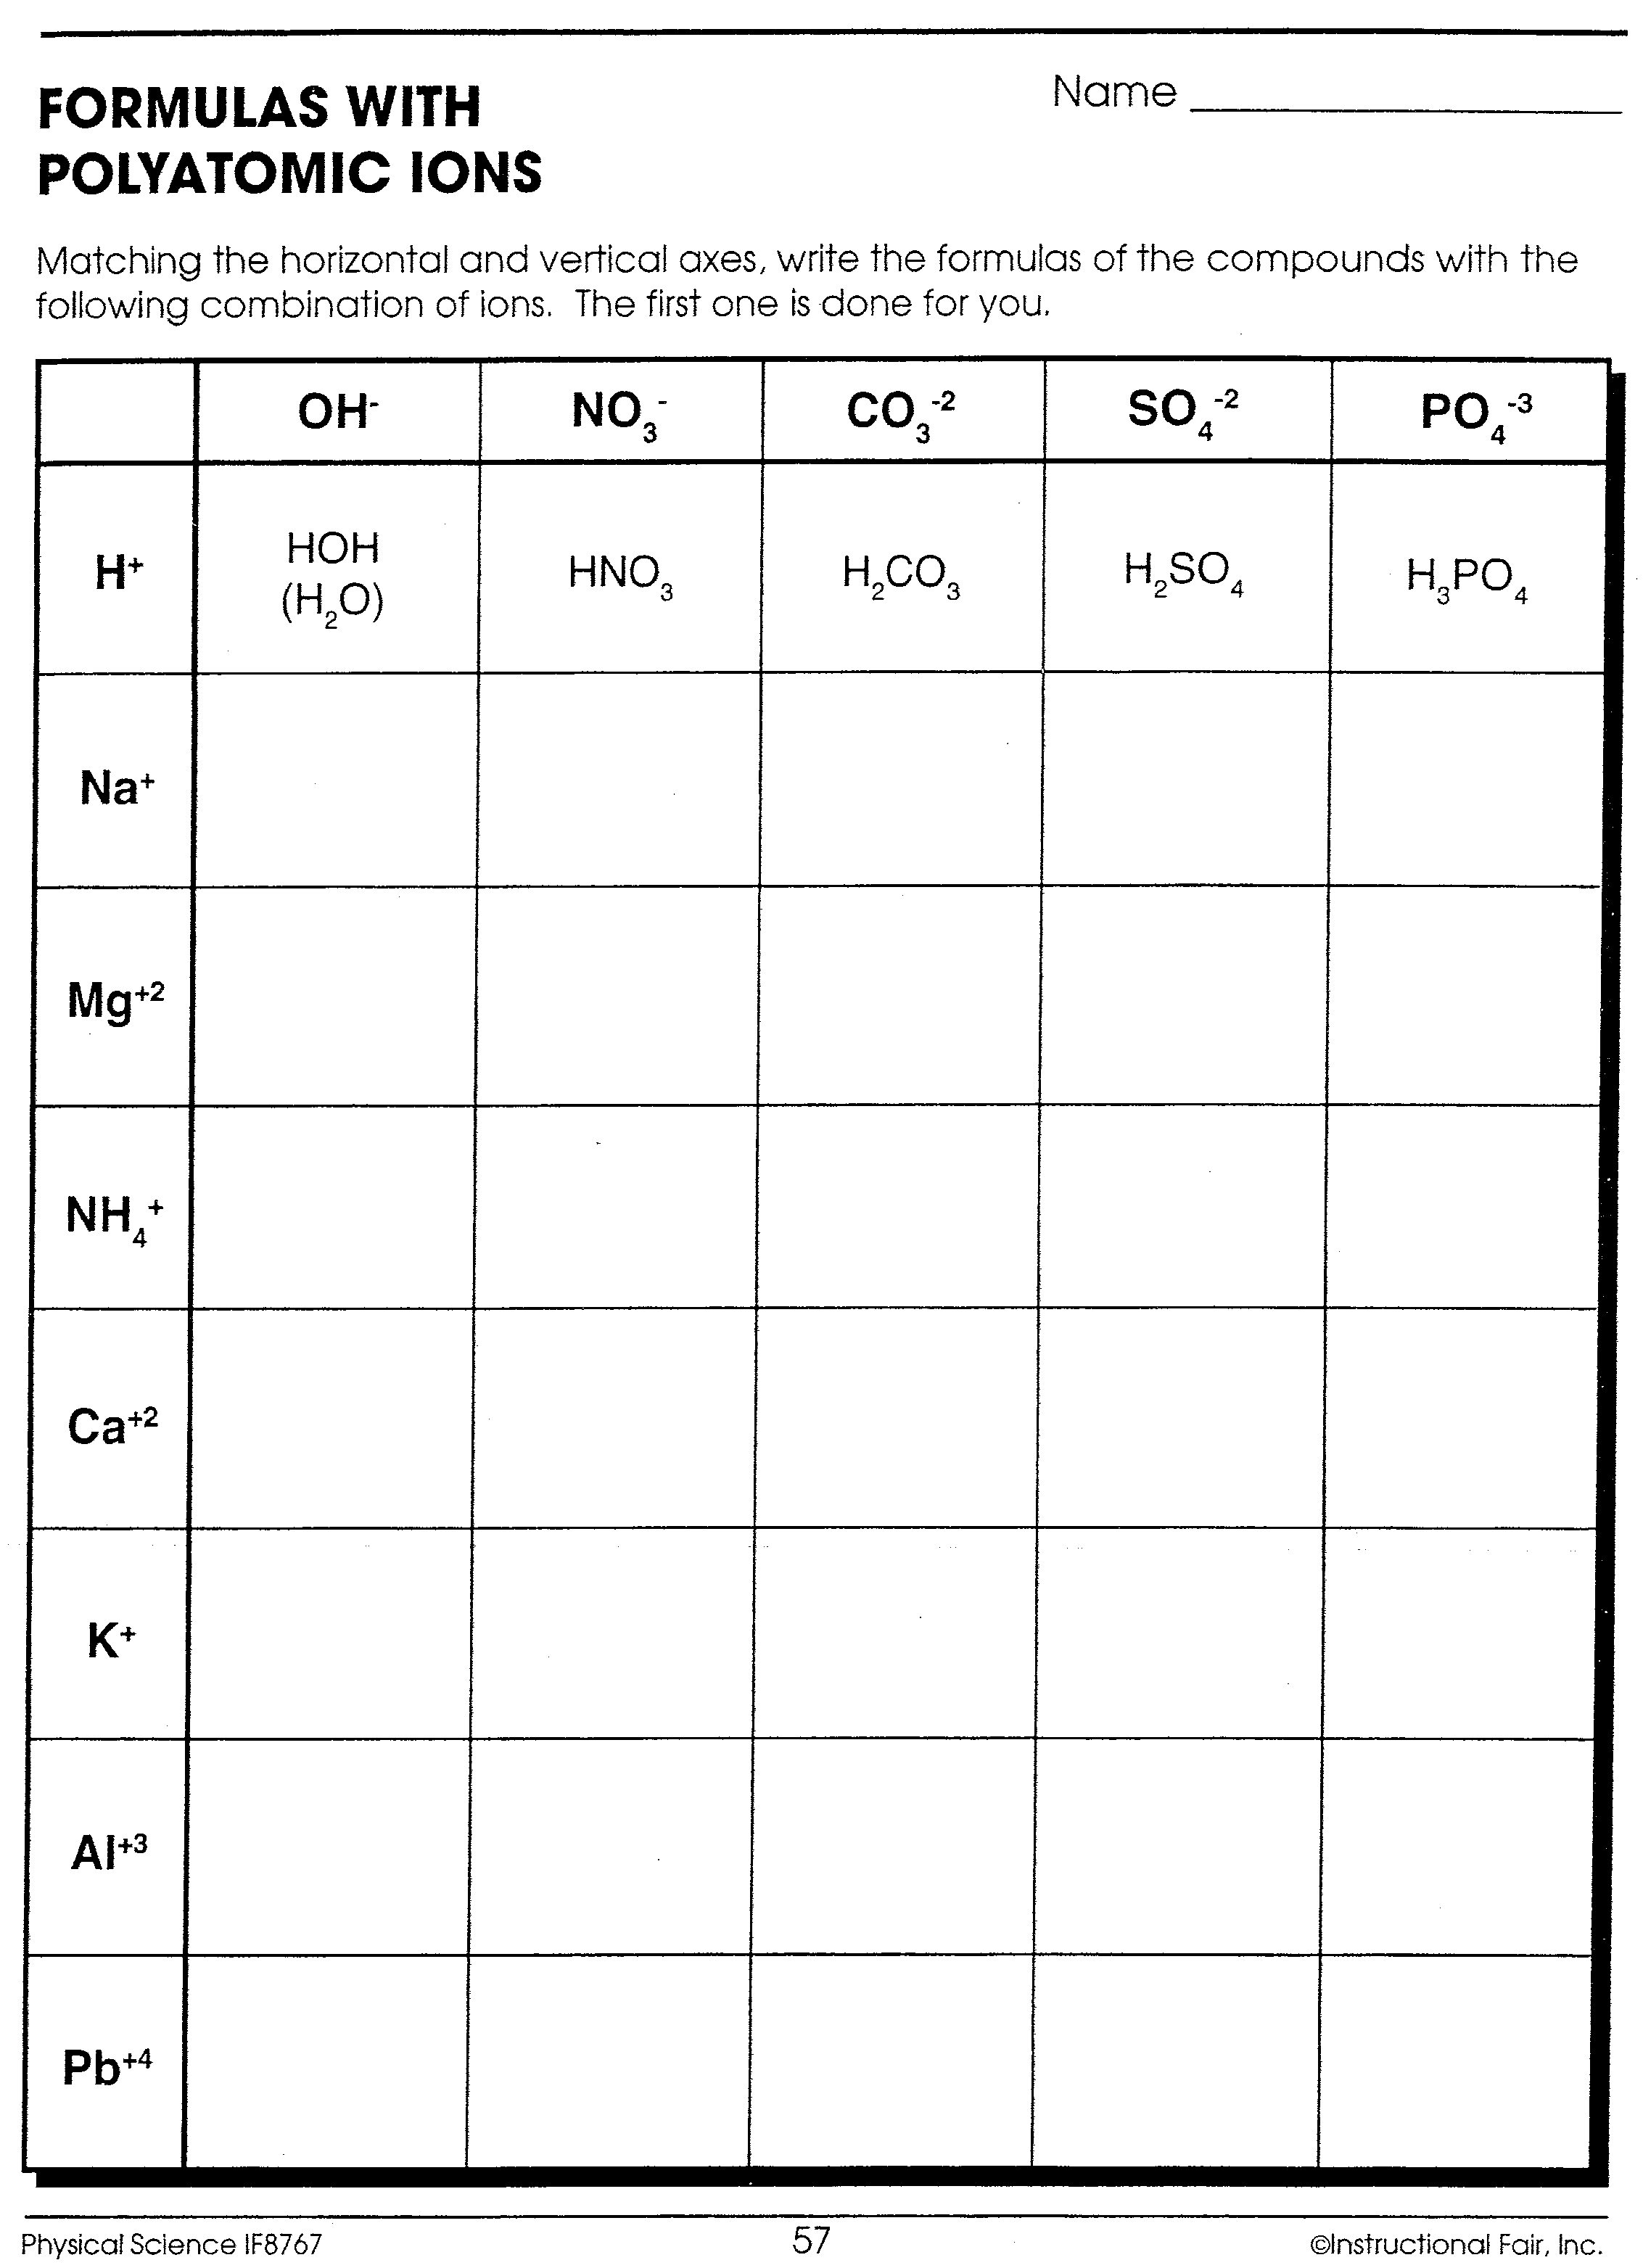 formulas-with-polyatomic-ions-worksheet-worksheets-for-kindergarten